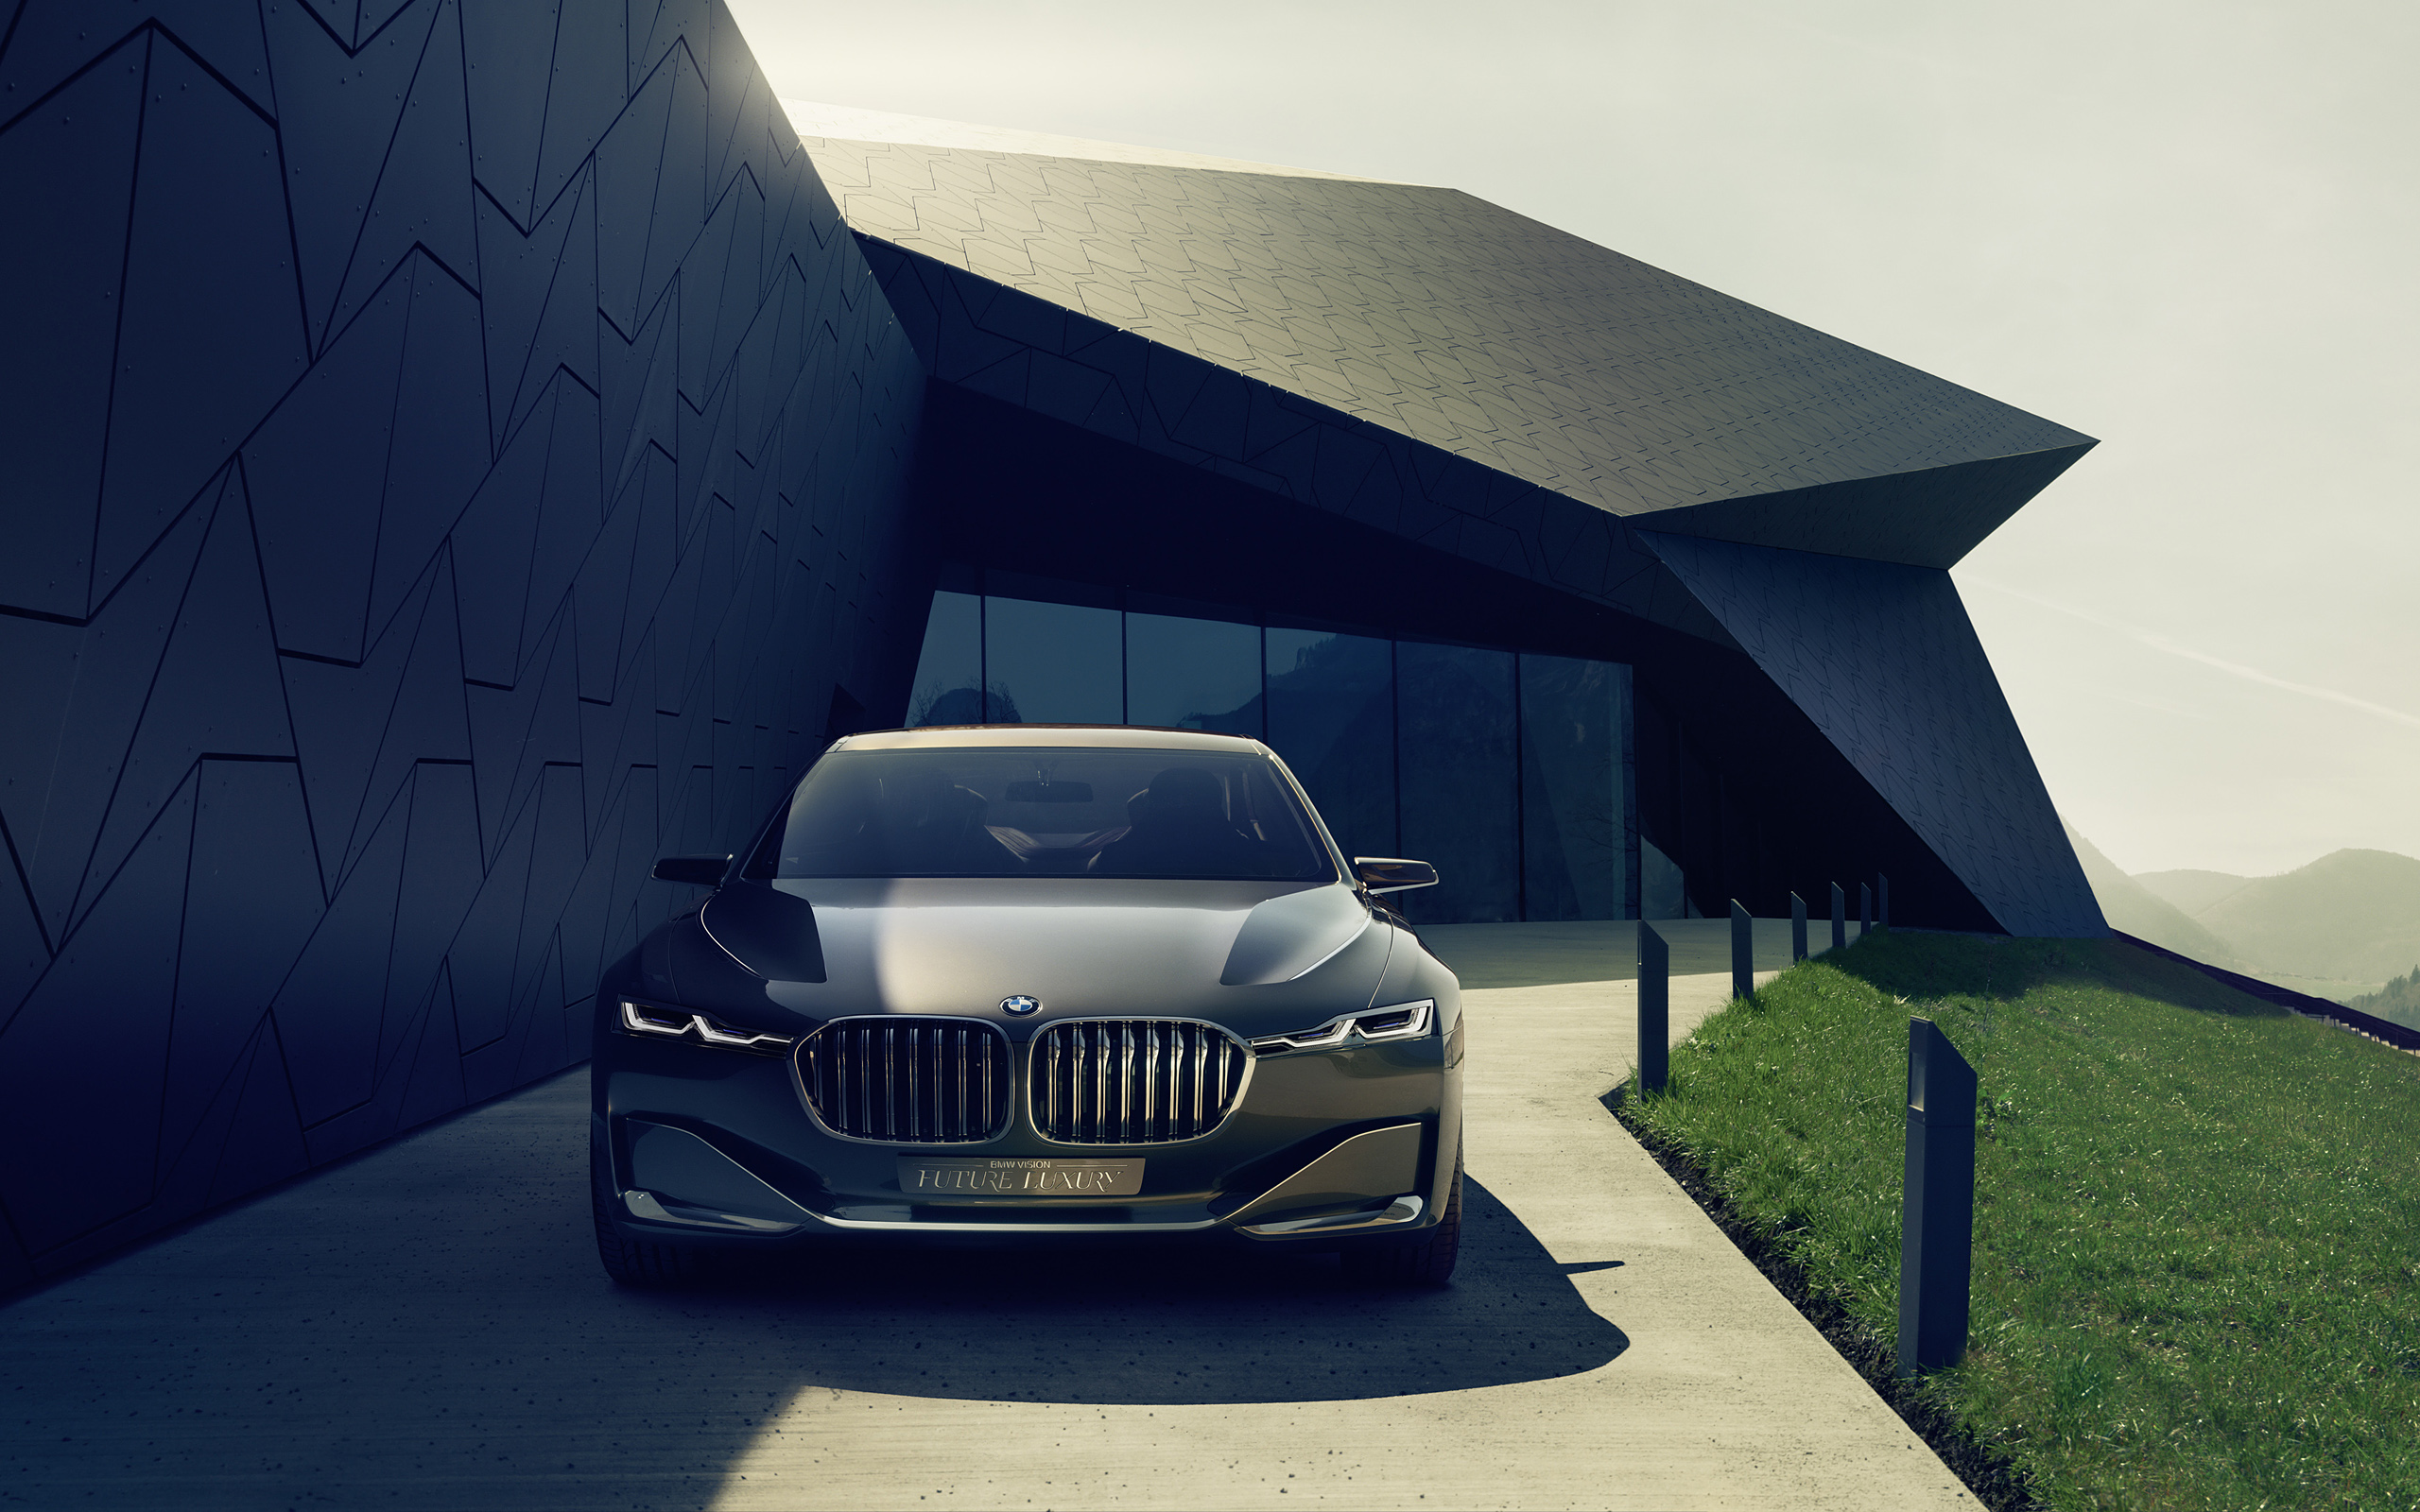  2014 BMW Vision Future Luxury Concept Wallpaper.